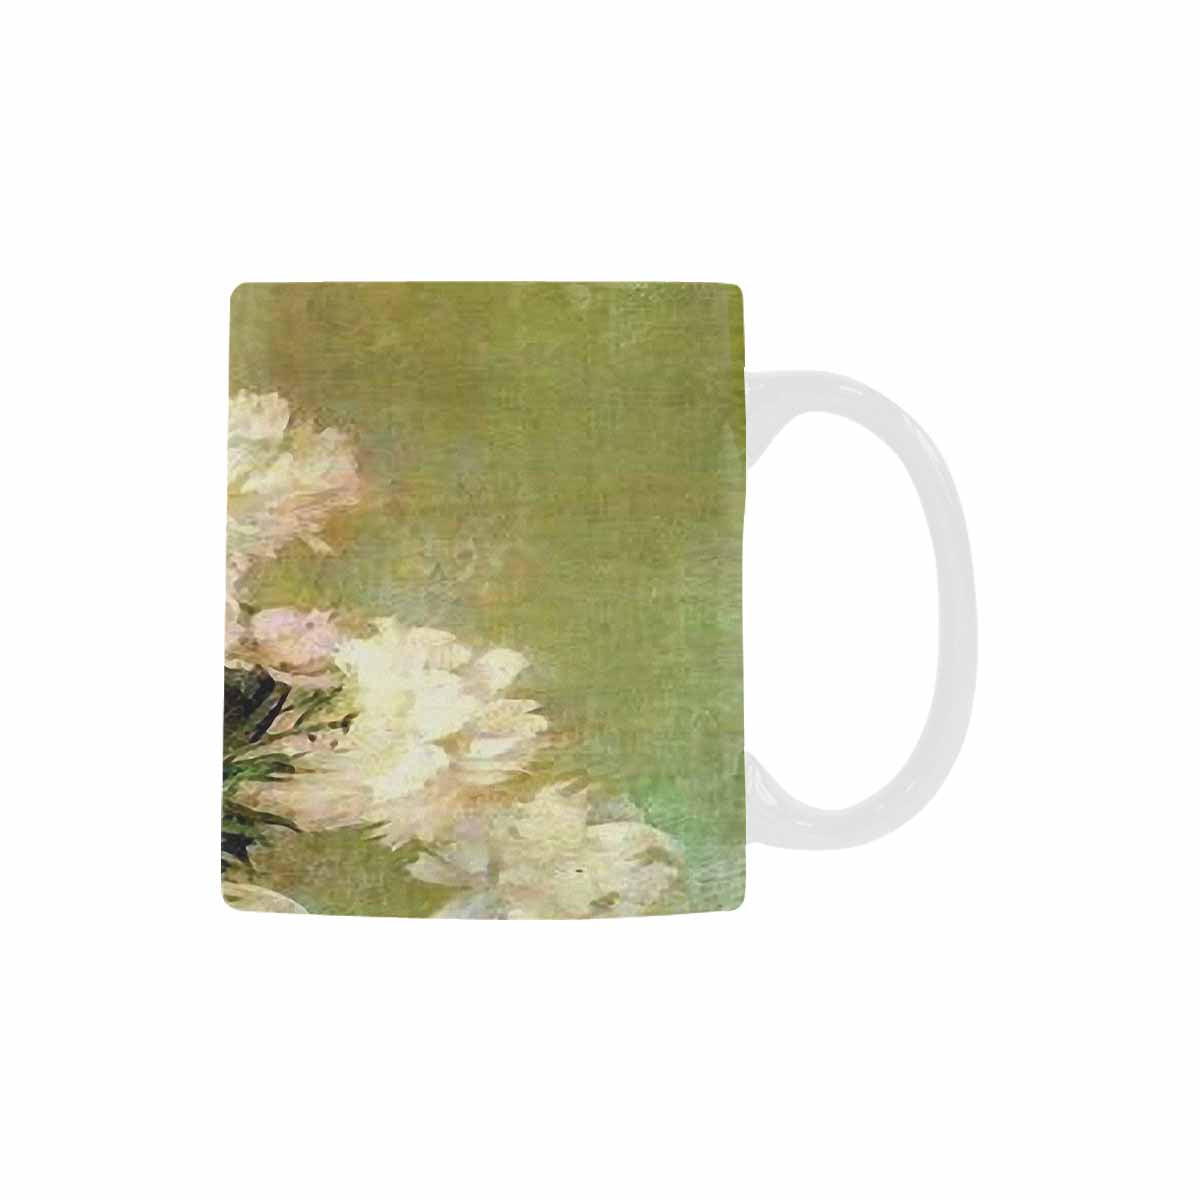 Vintage floral coffee mug or tea cup, Design 35